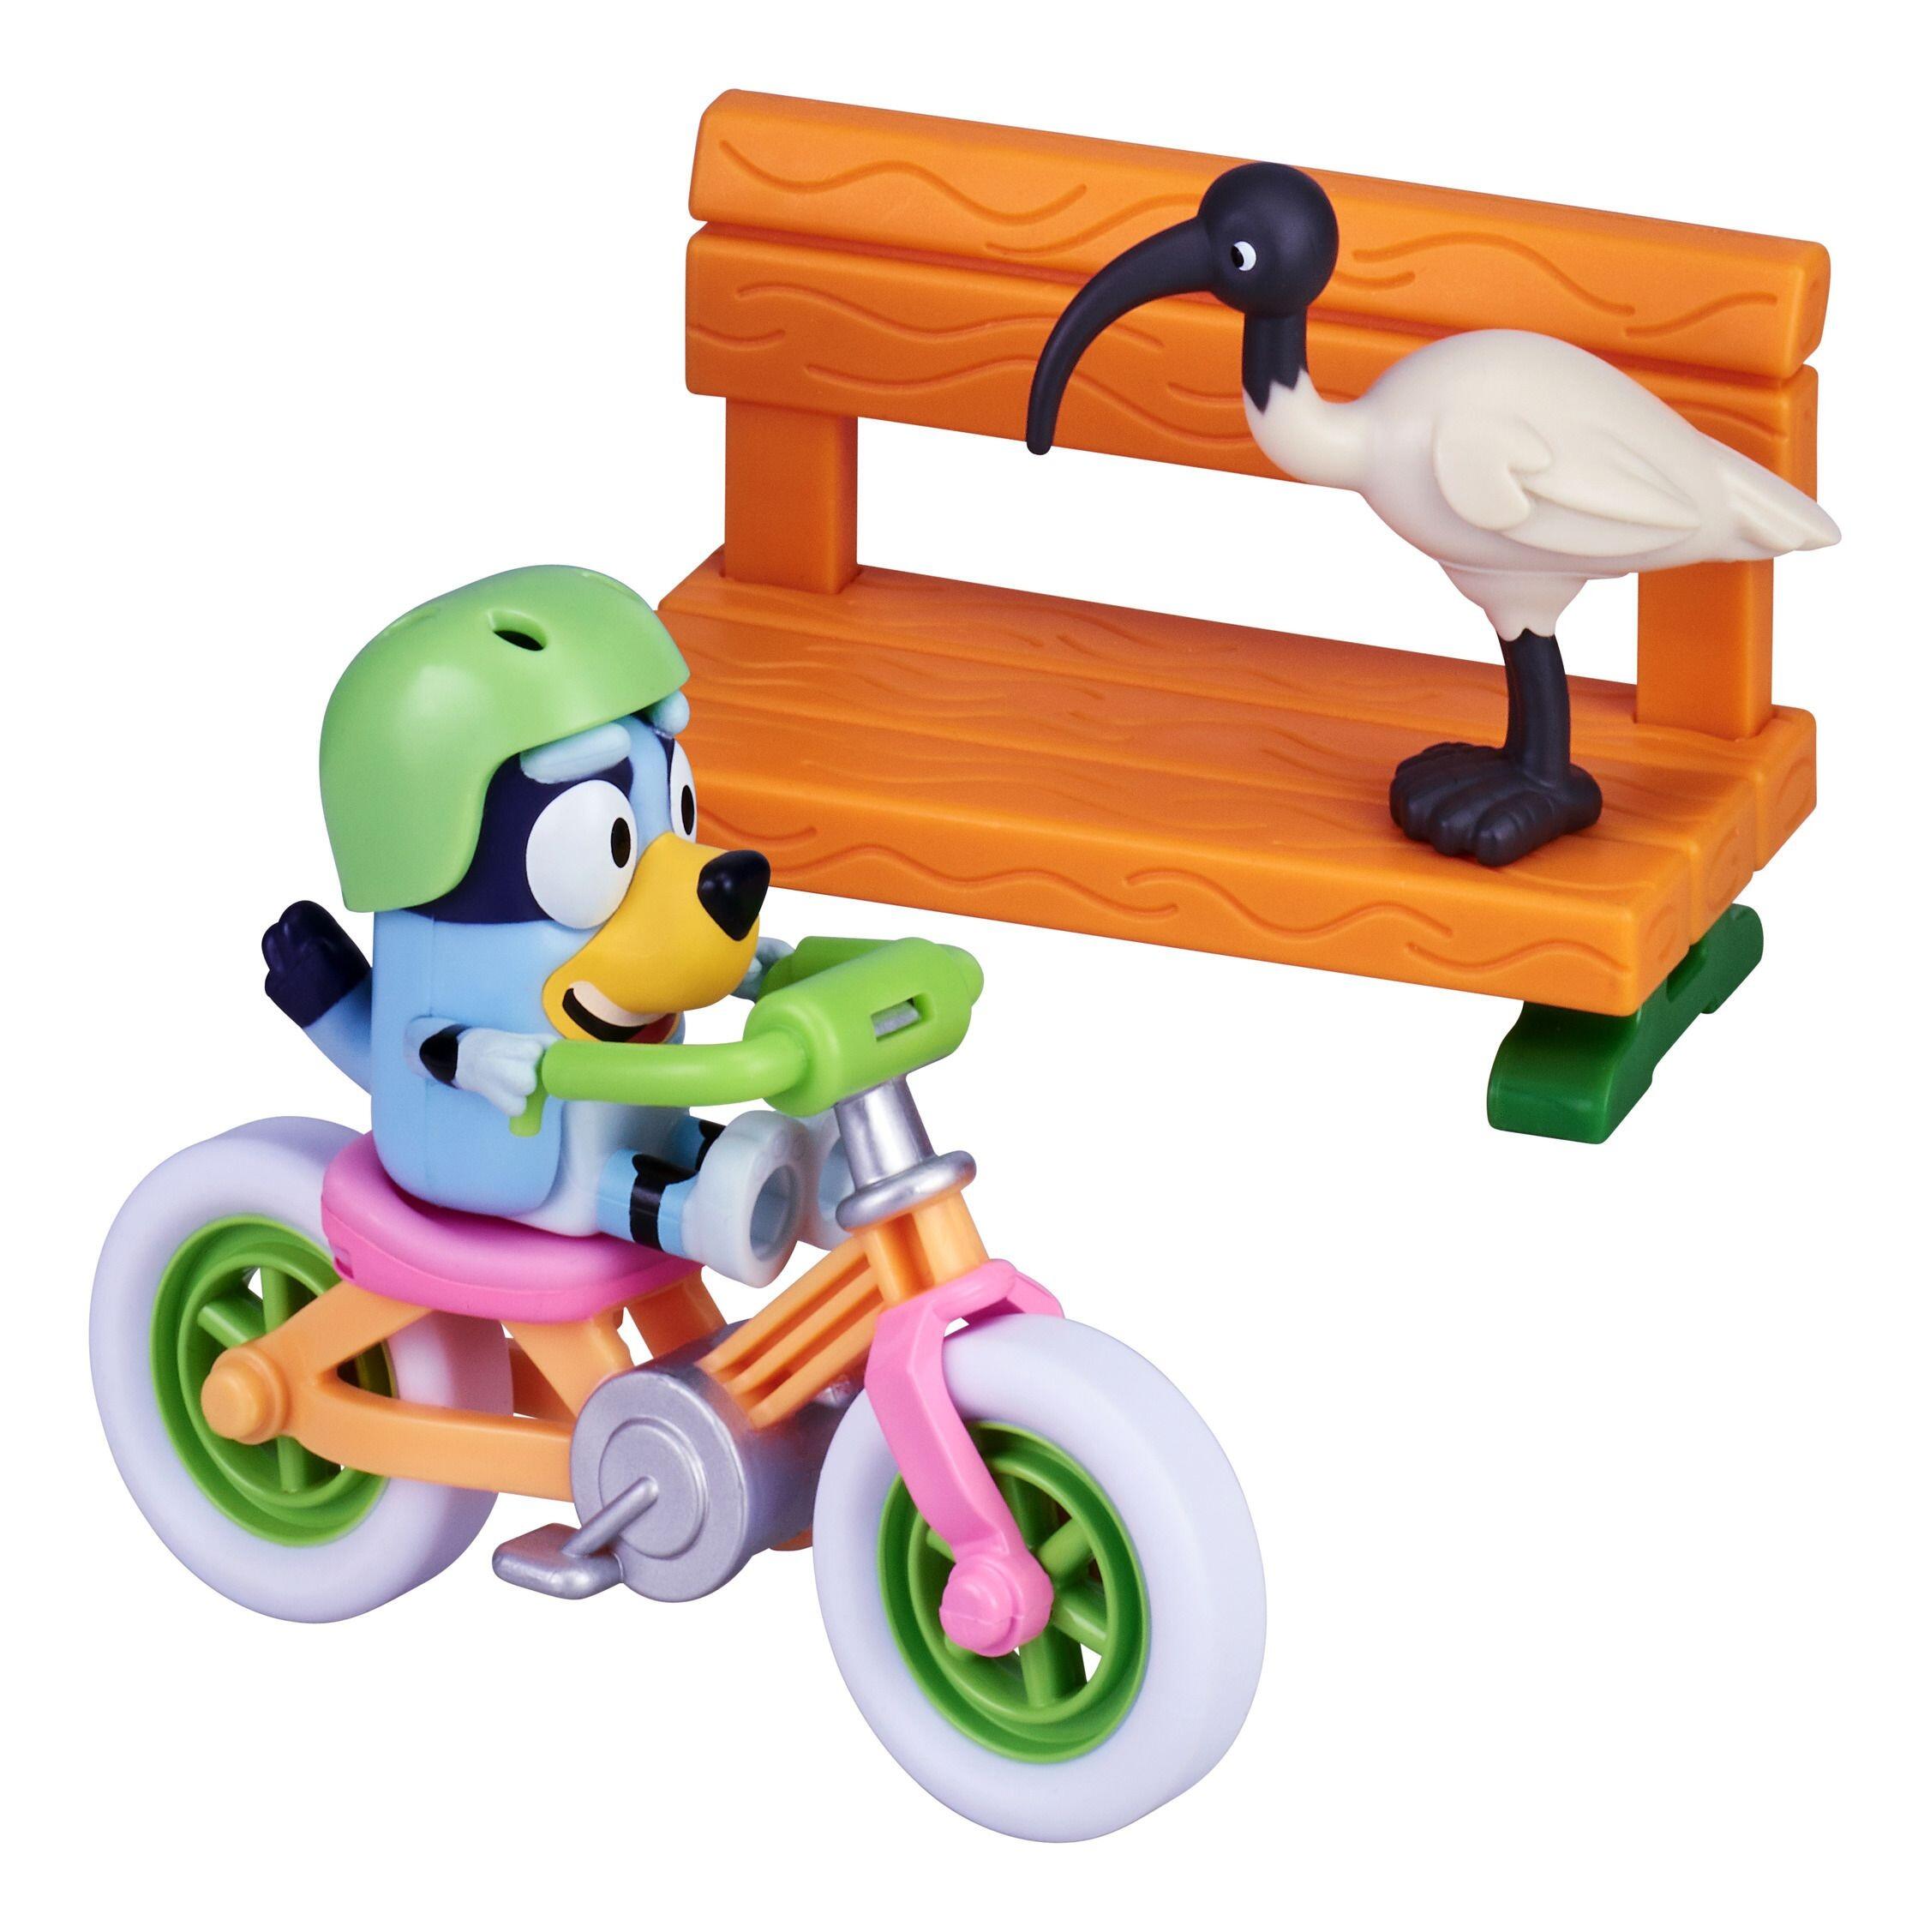 Bluey's Bike Vehicle and Figure Pack